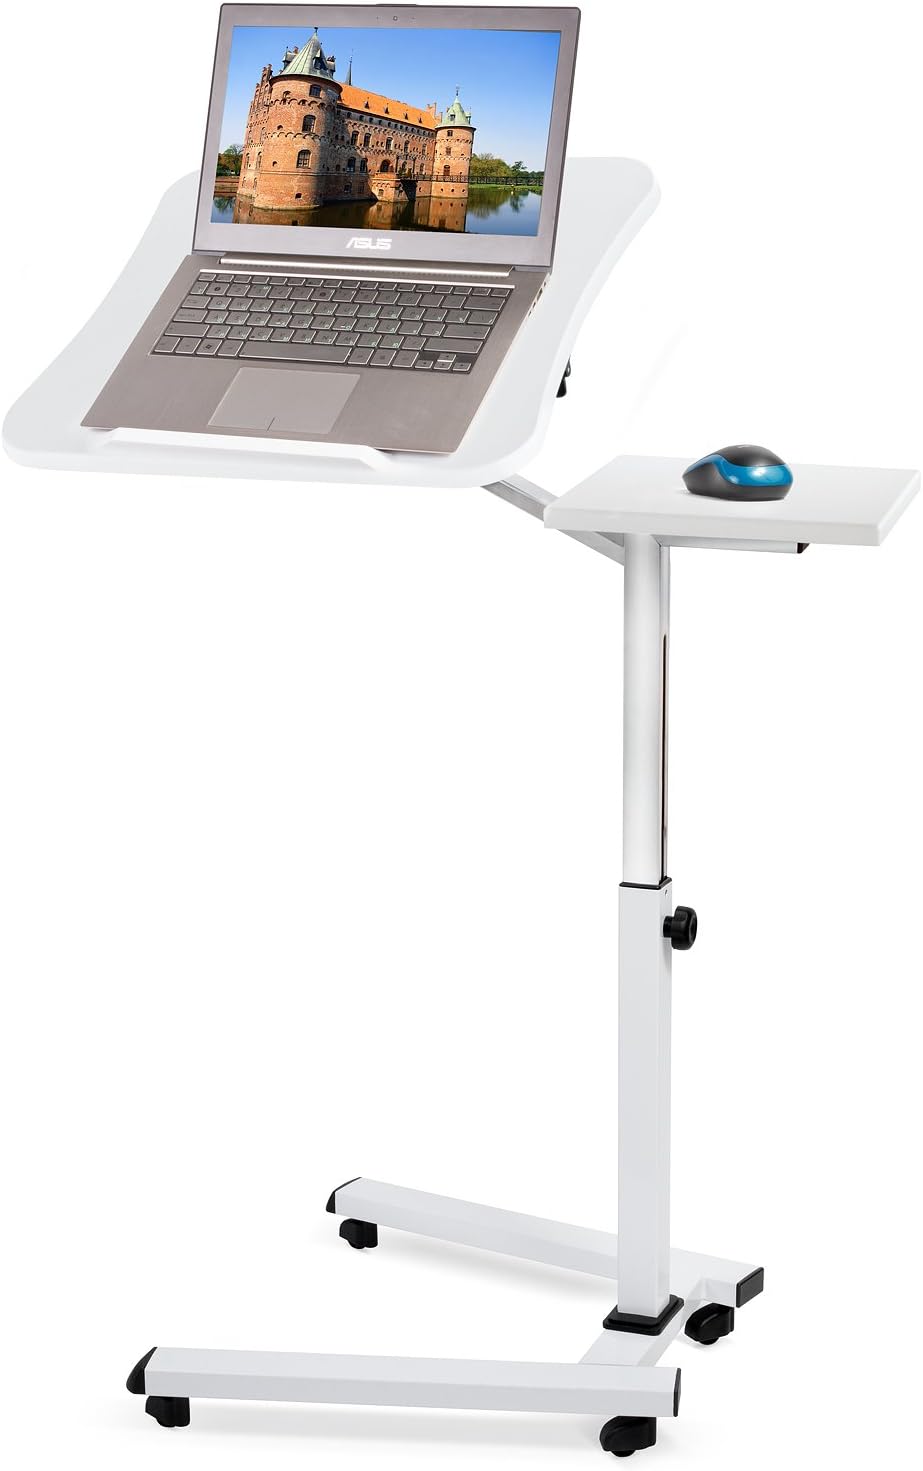 67~110cm Adjustable Height Standing PC Laptop Desk Computer Table Mobile Wheels 